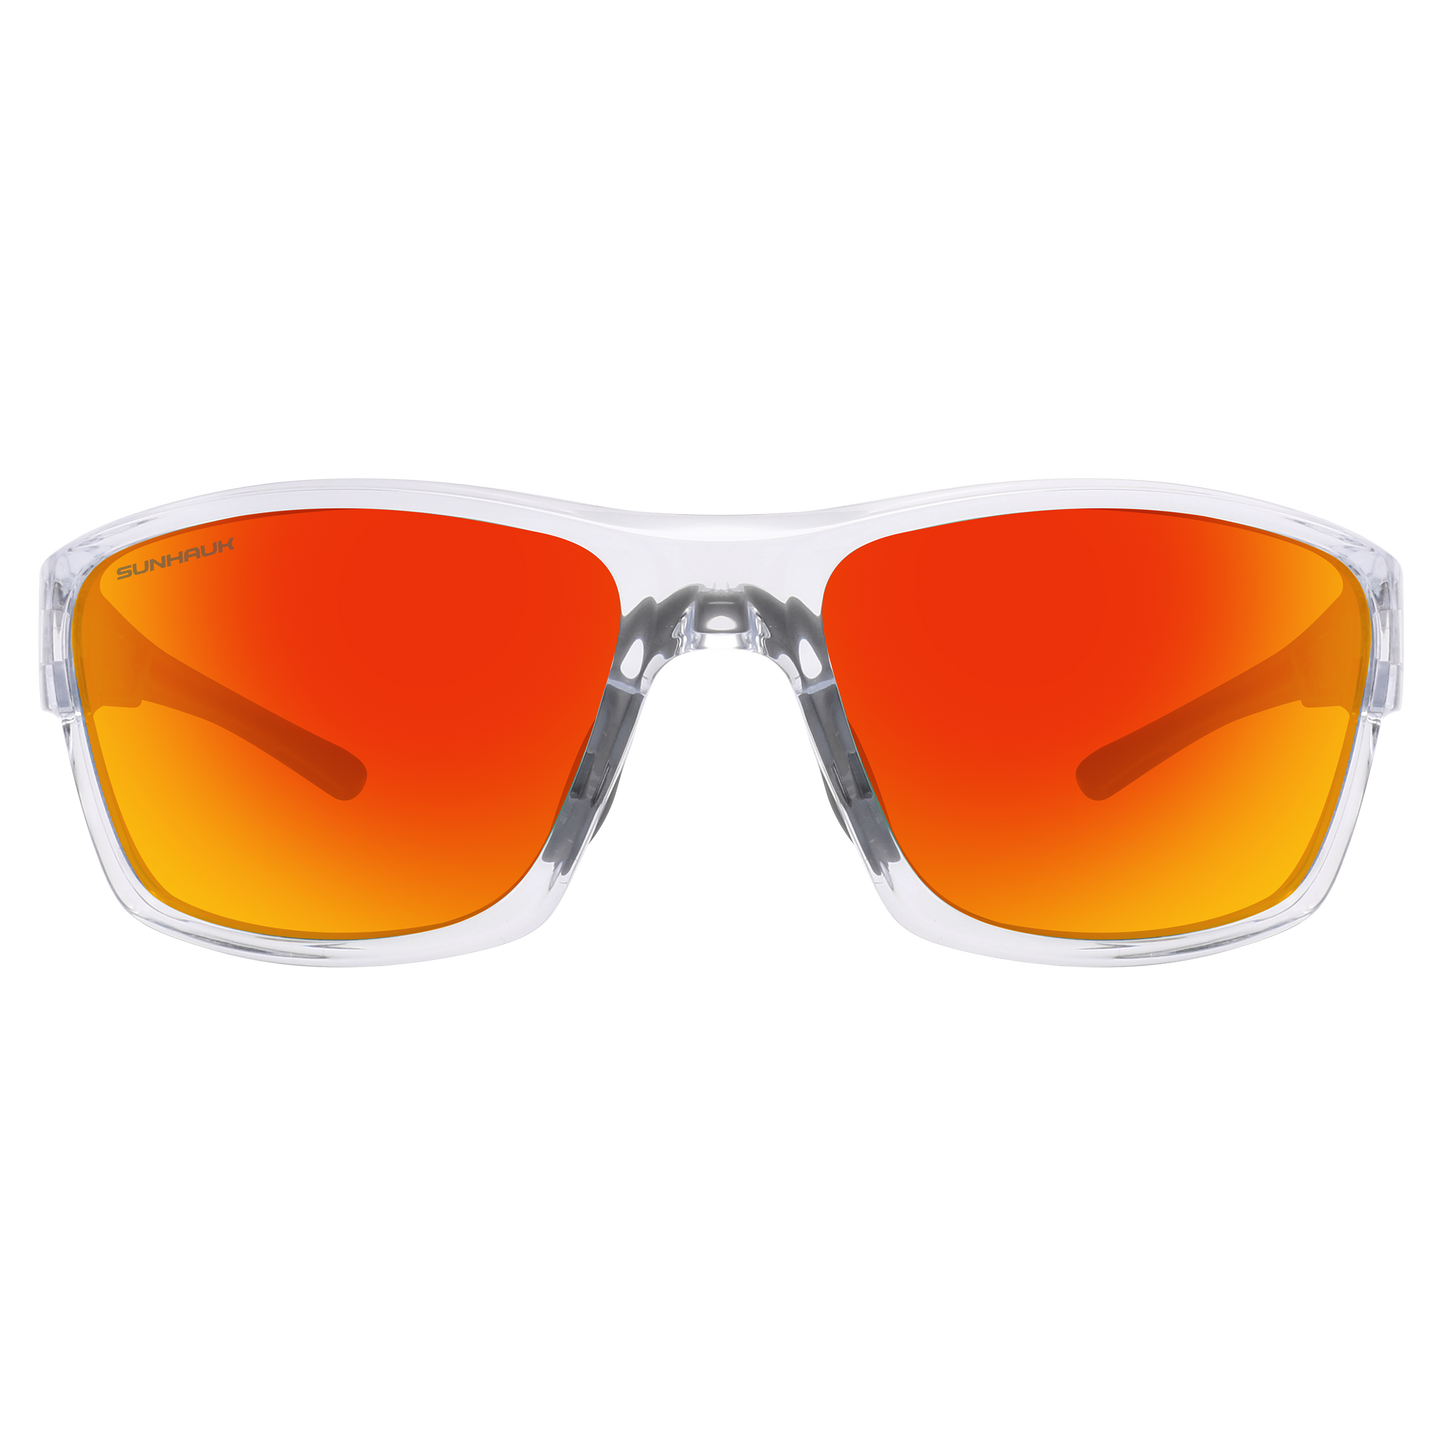 Prism Blaze - Orange Tint Sunglasses | SUNHAUK